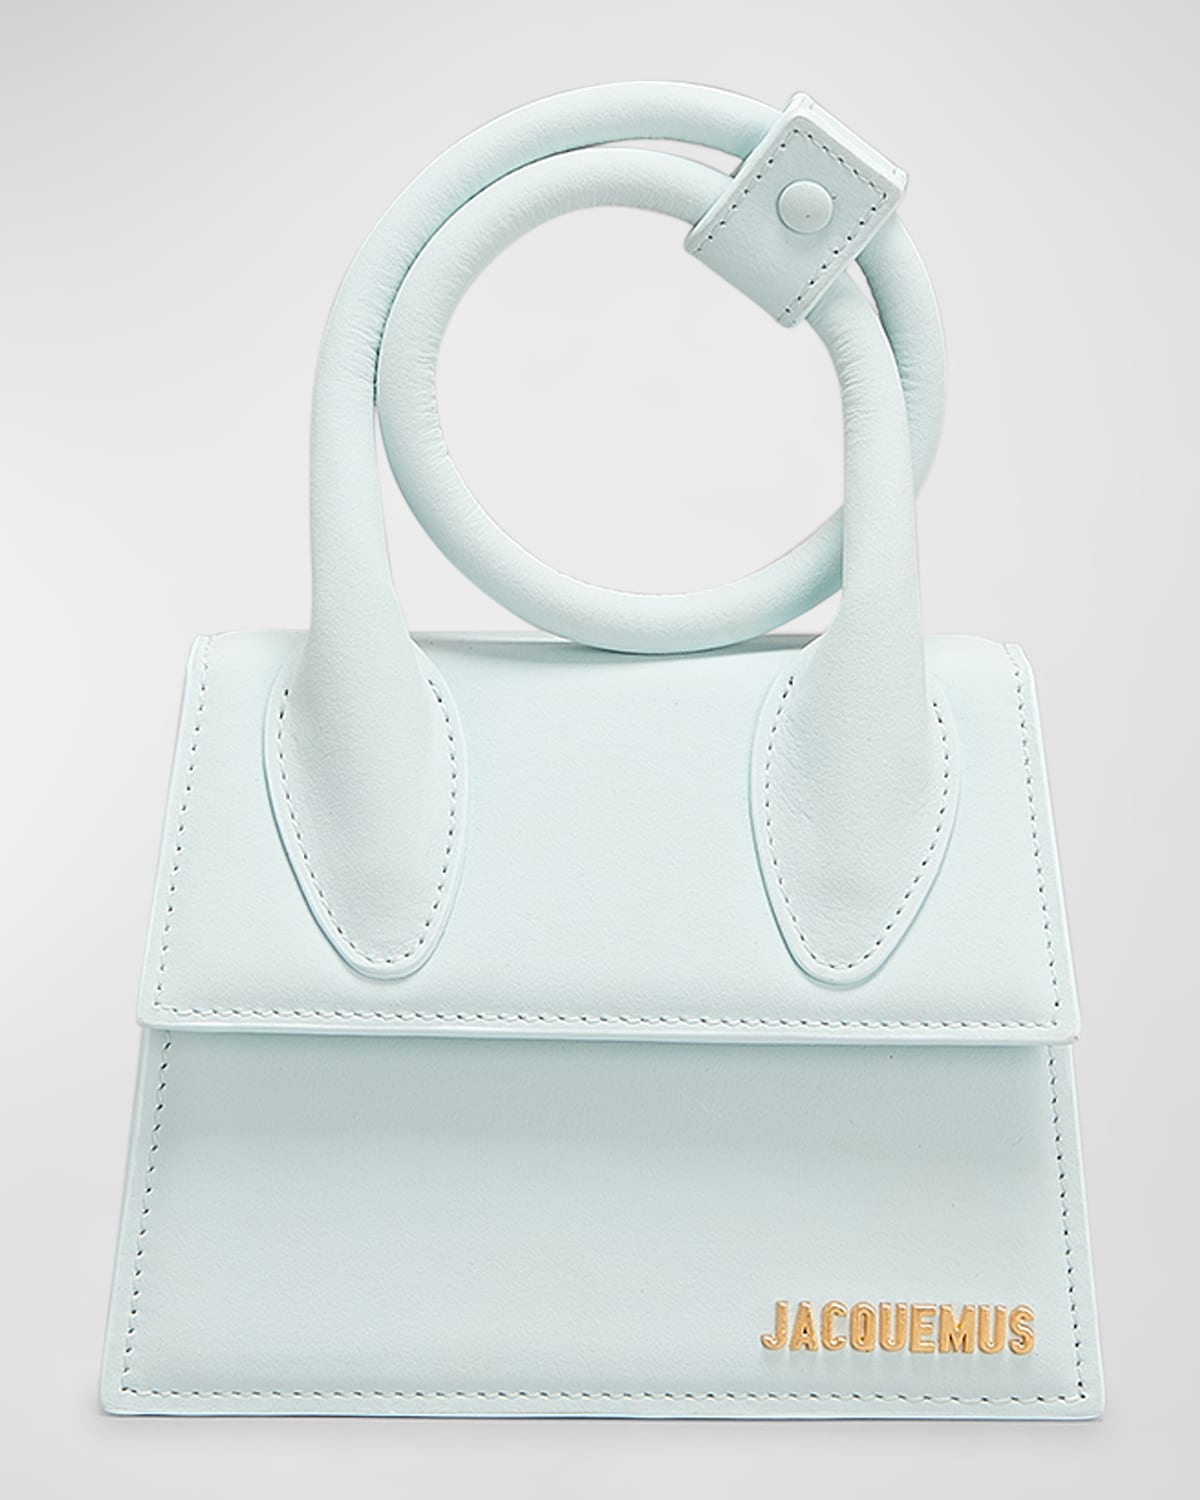 Jacquemus Le Chiquito Noeud Top Handle Bag